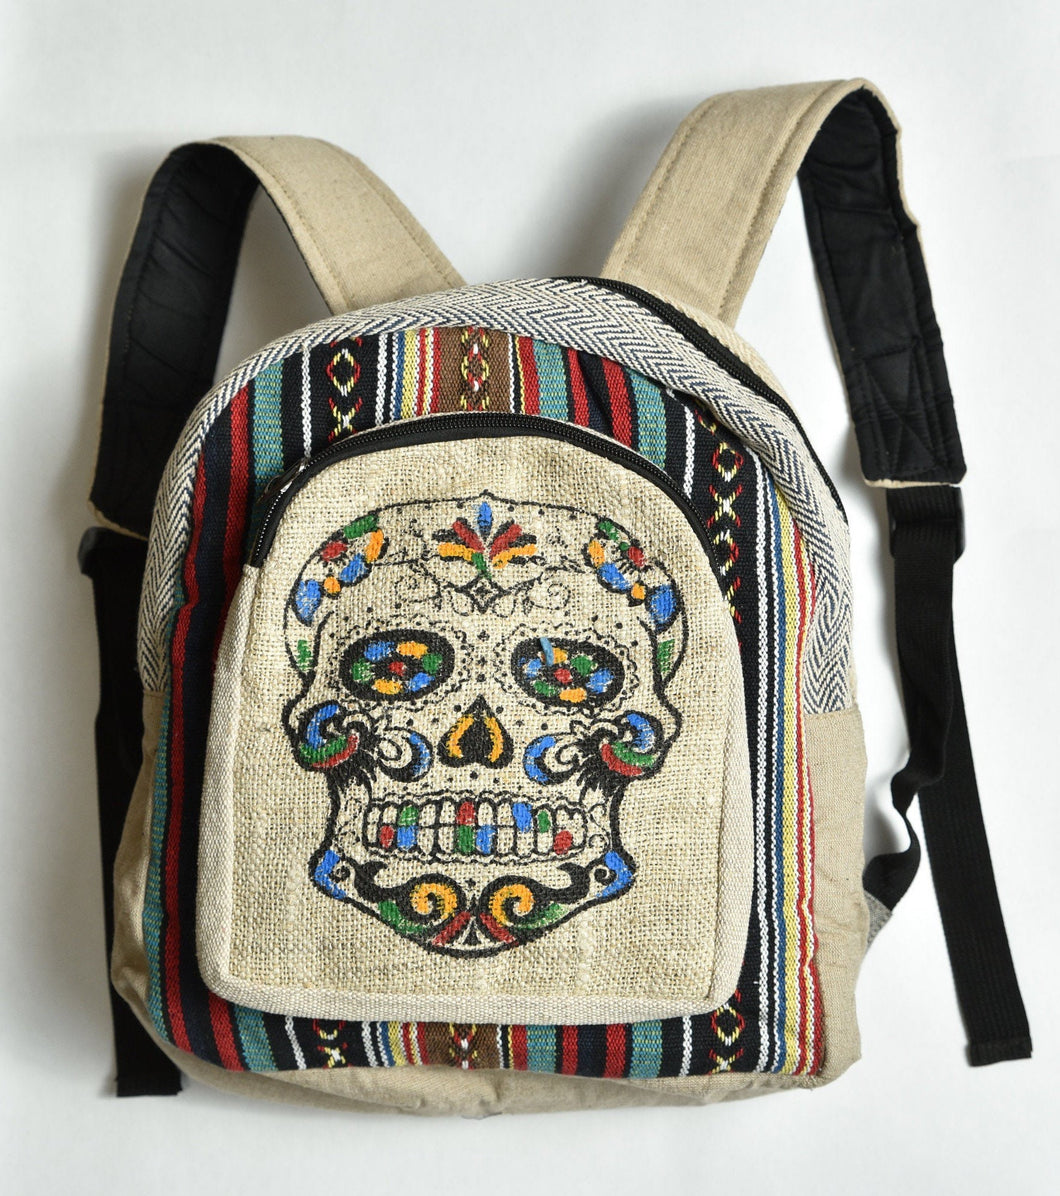 Skull Backpack (15 by 12 inches) - 100% Sustainable and Natural Hemp Backpack - Fair Trade Bag - Tribal Hemp Bag - Holiday Gifting